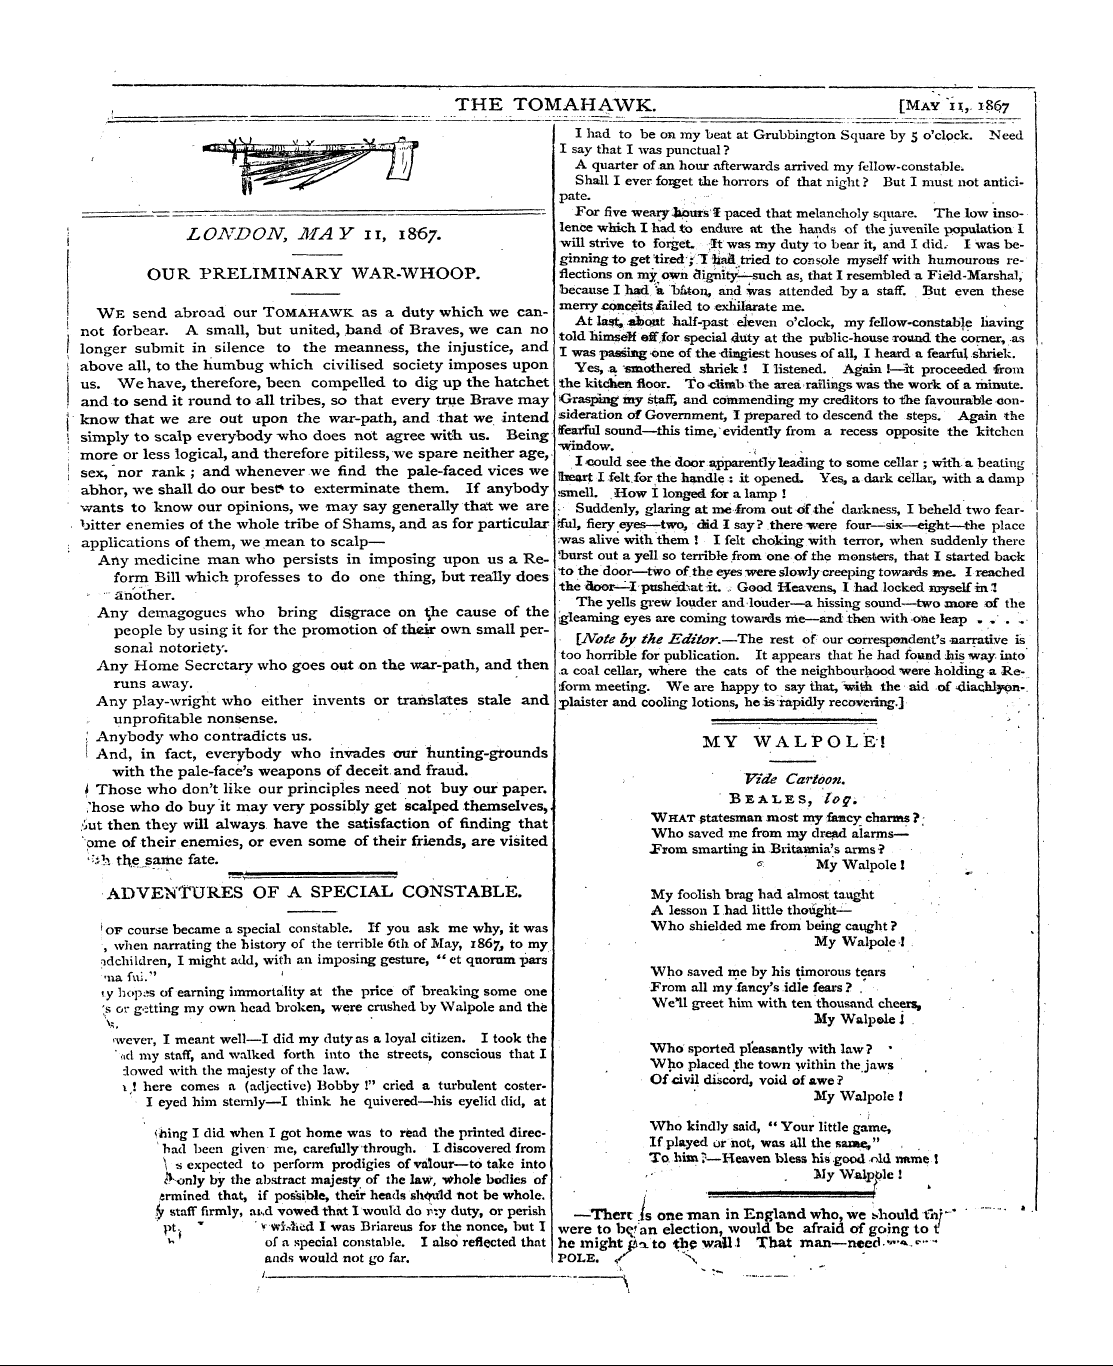 Tomahawk (1867-1870): jS F Y, 1st edition: 4